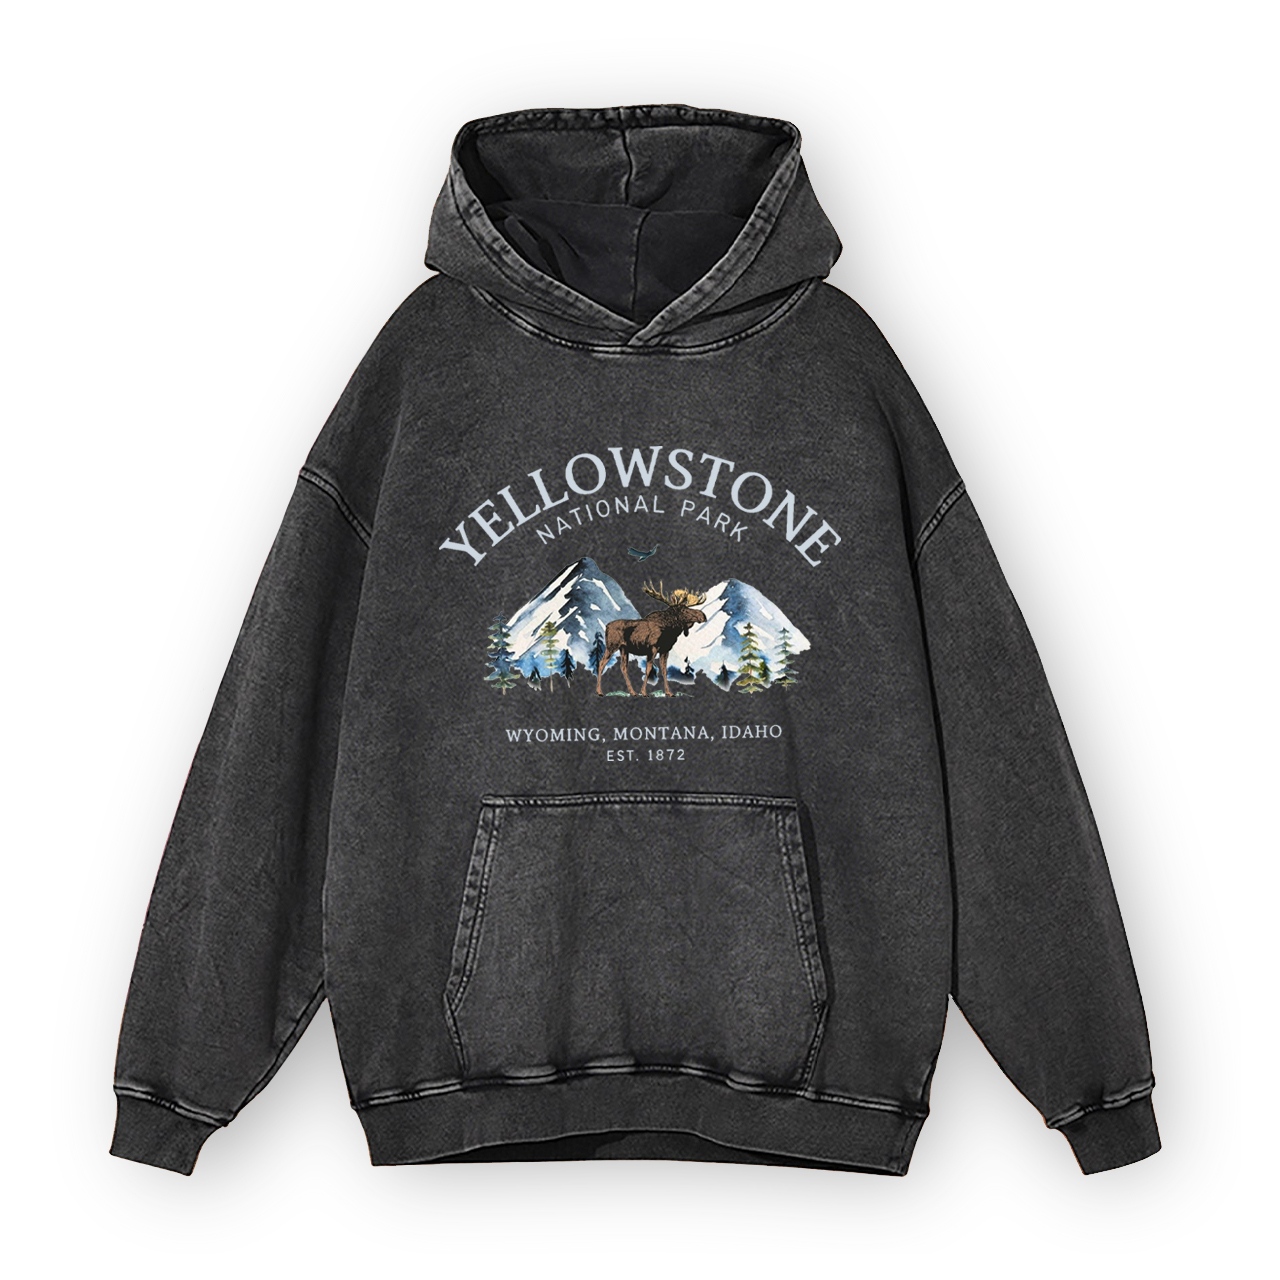 Yellowstone National Park Garment-Dye Hoodies